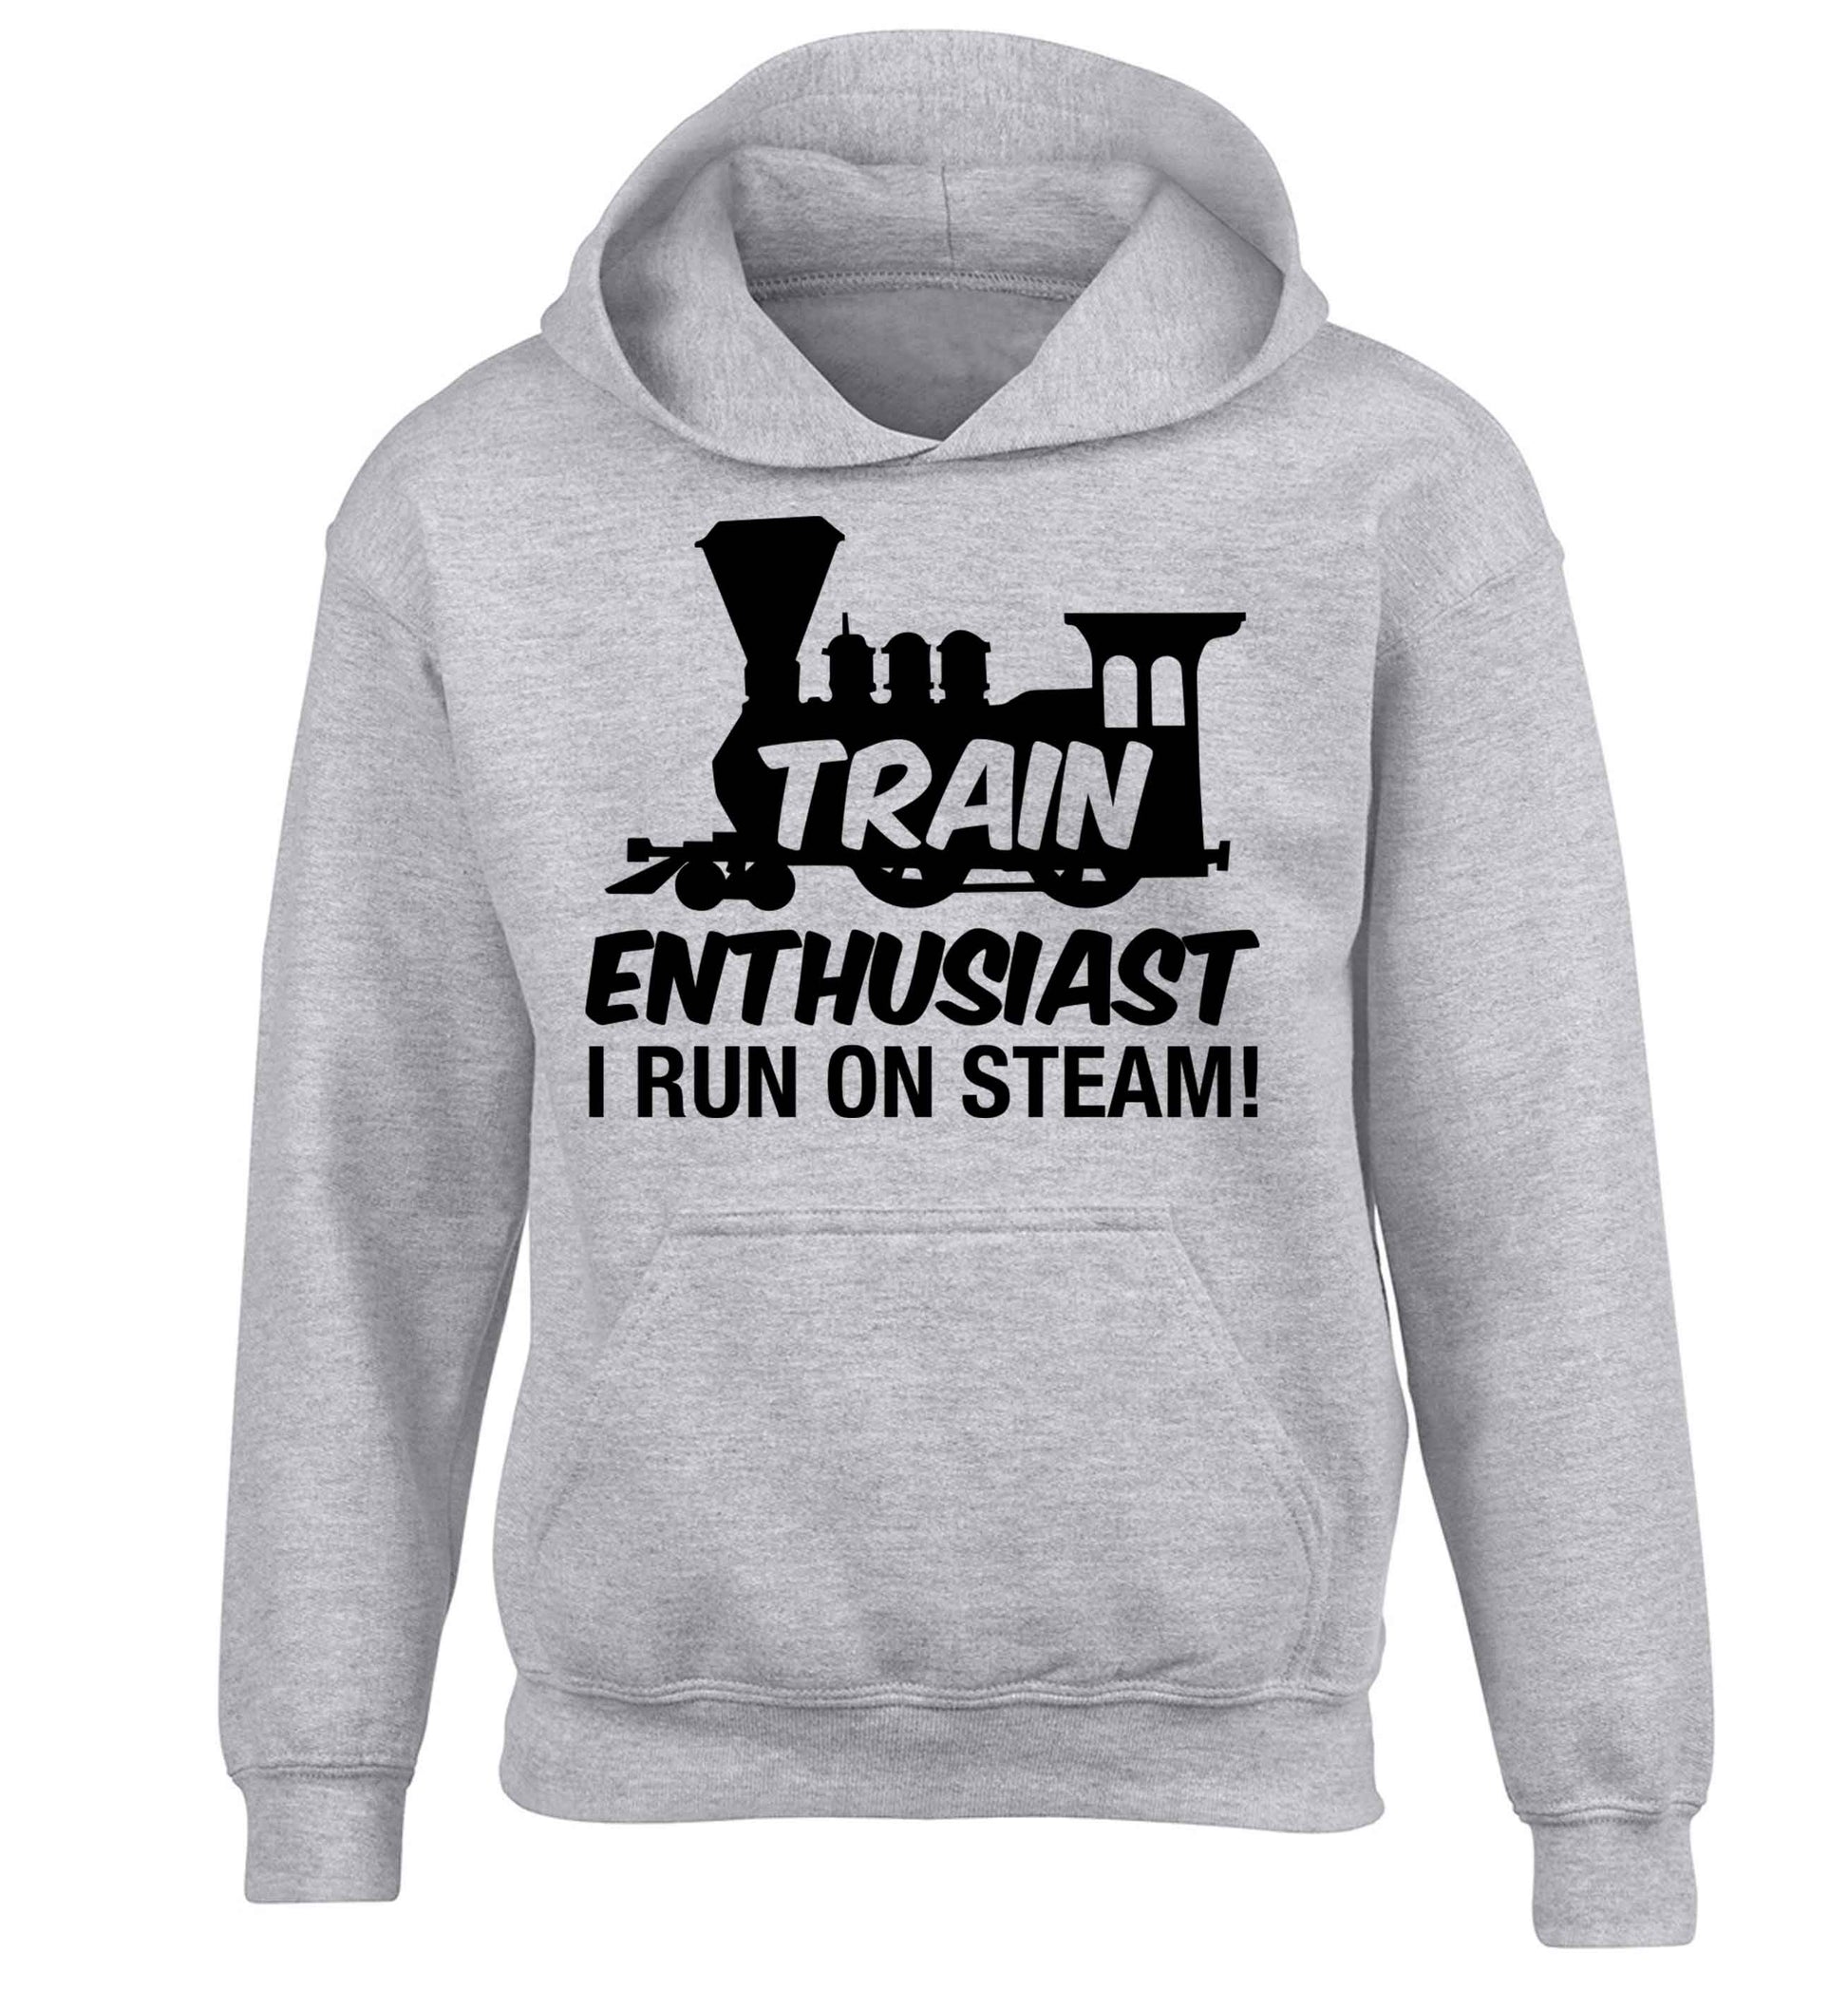 Train enthusiast I run on steam children's grey hoodie 12-13 Years